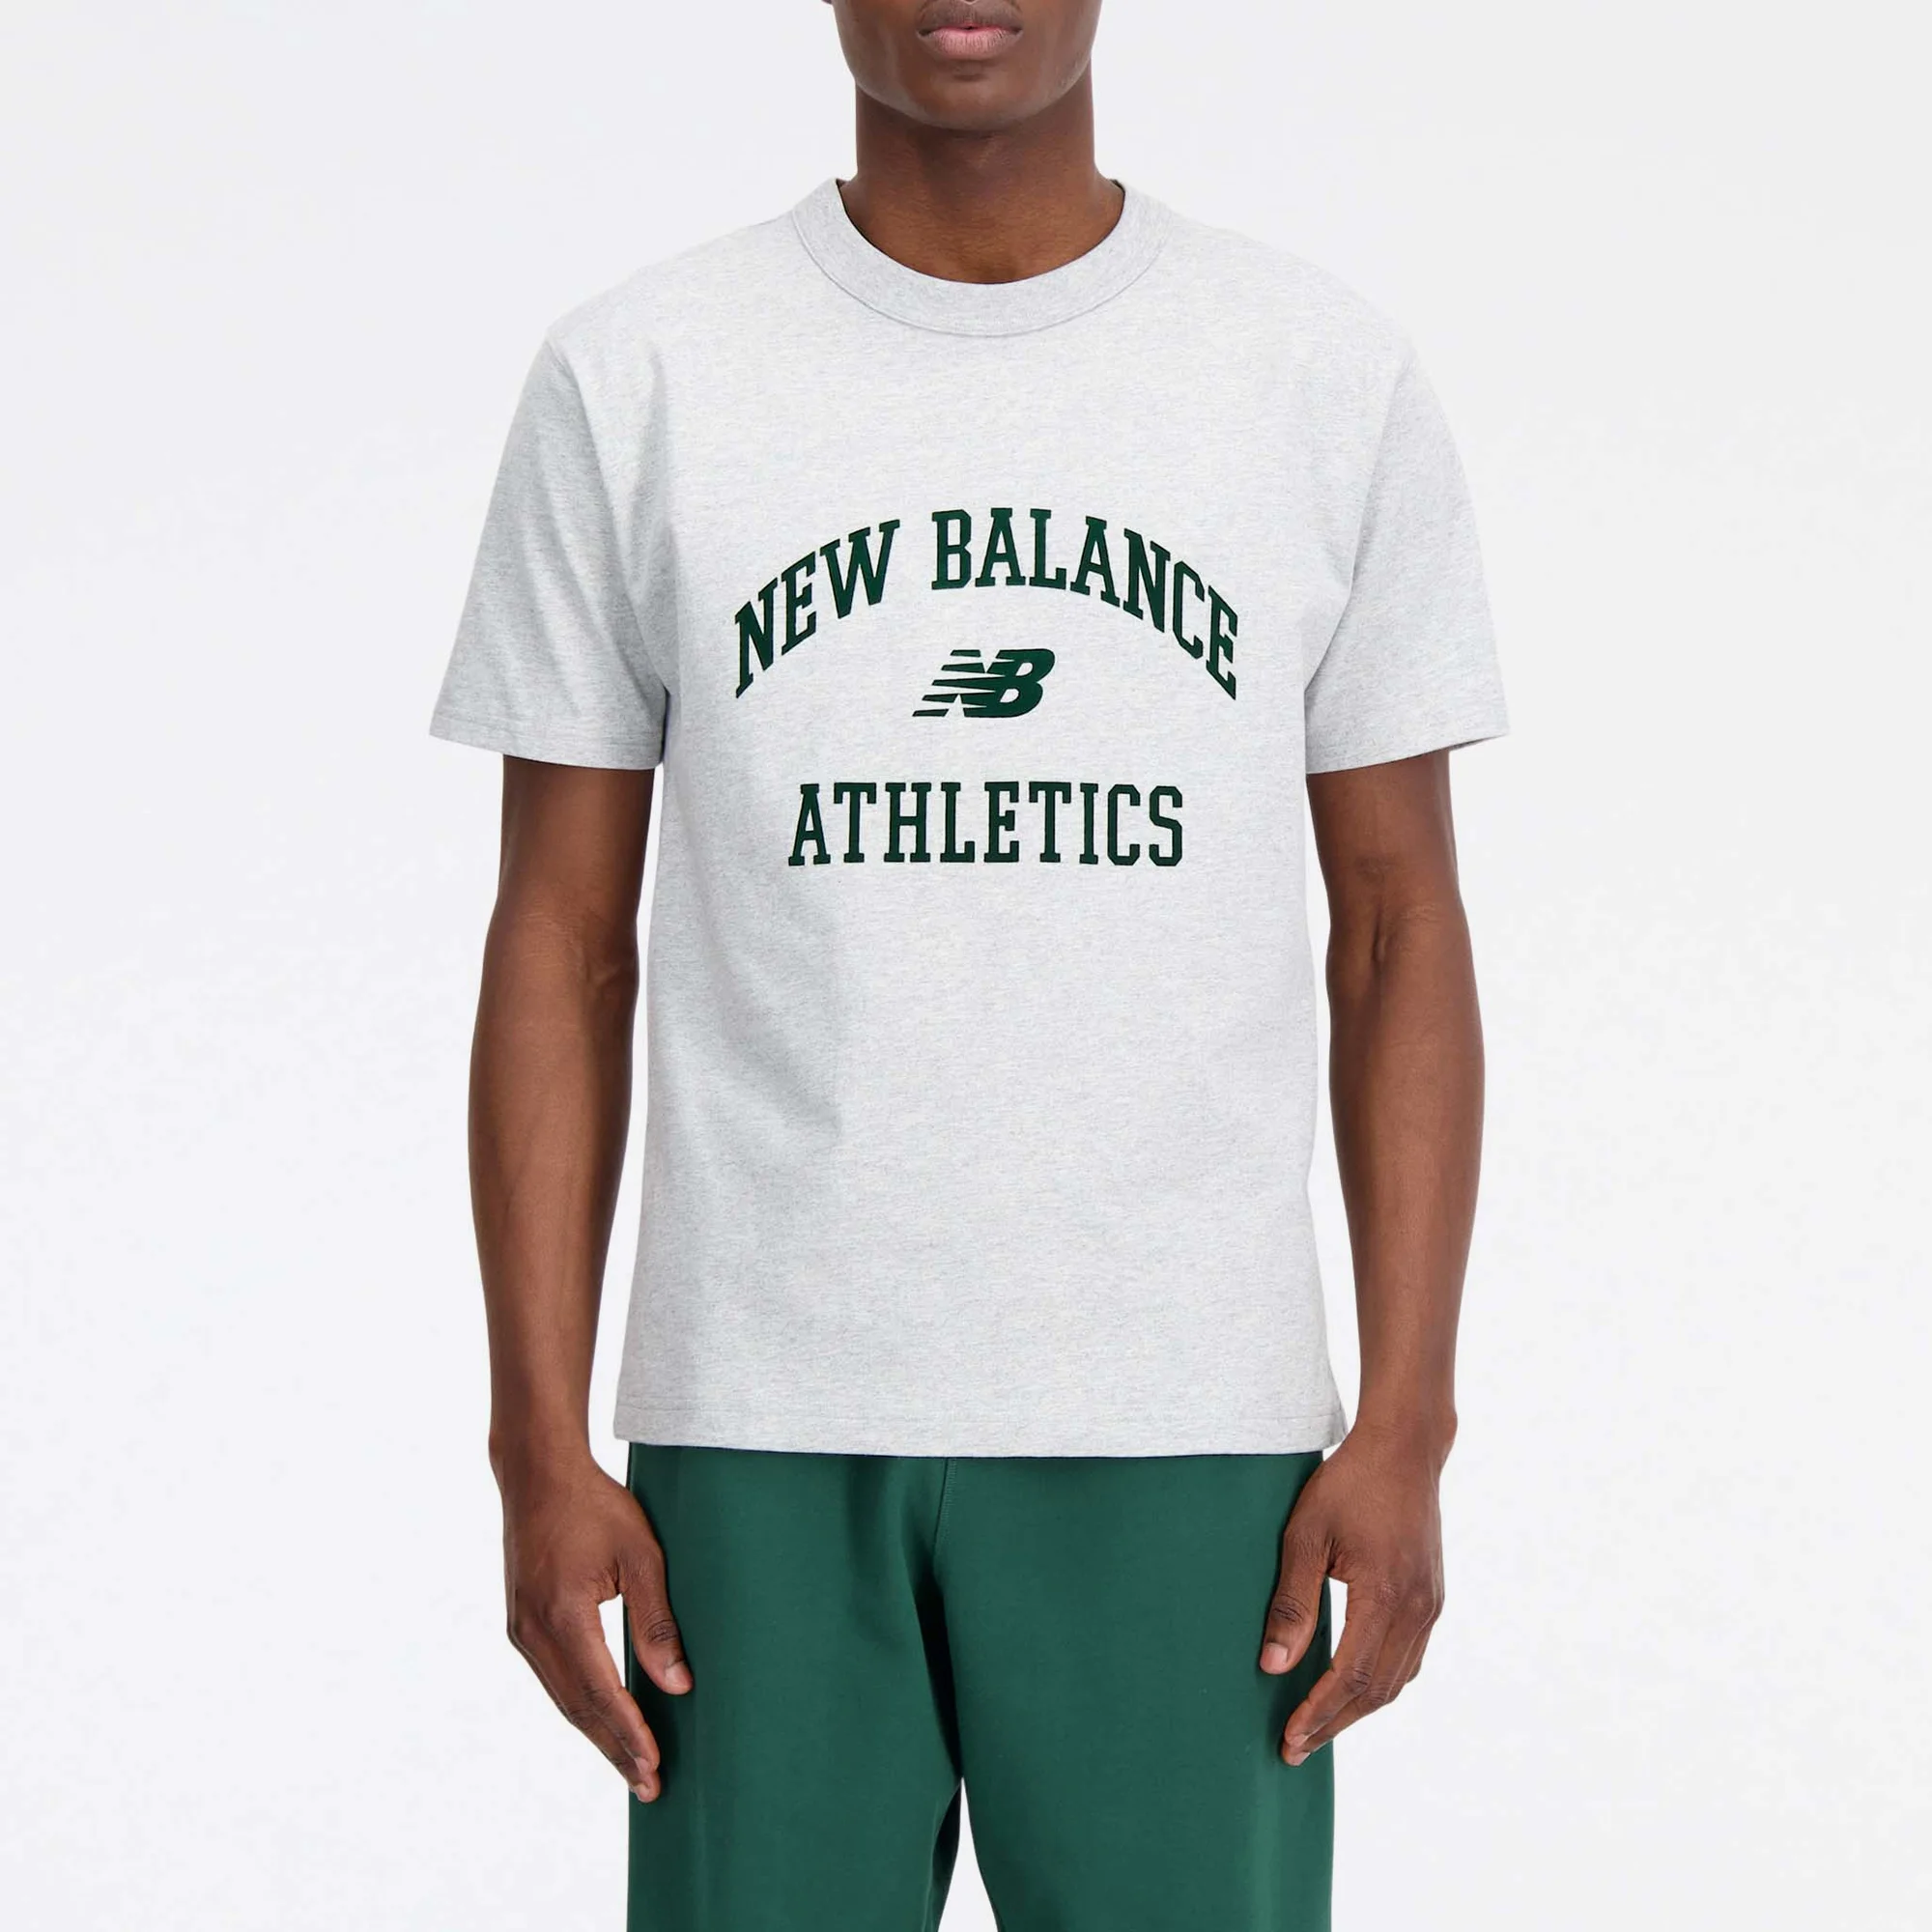 New Balance Athletics Varsity Graphic Cotton-Jersey T-Shirt - S Image 1